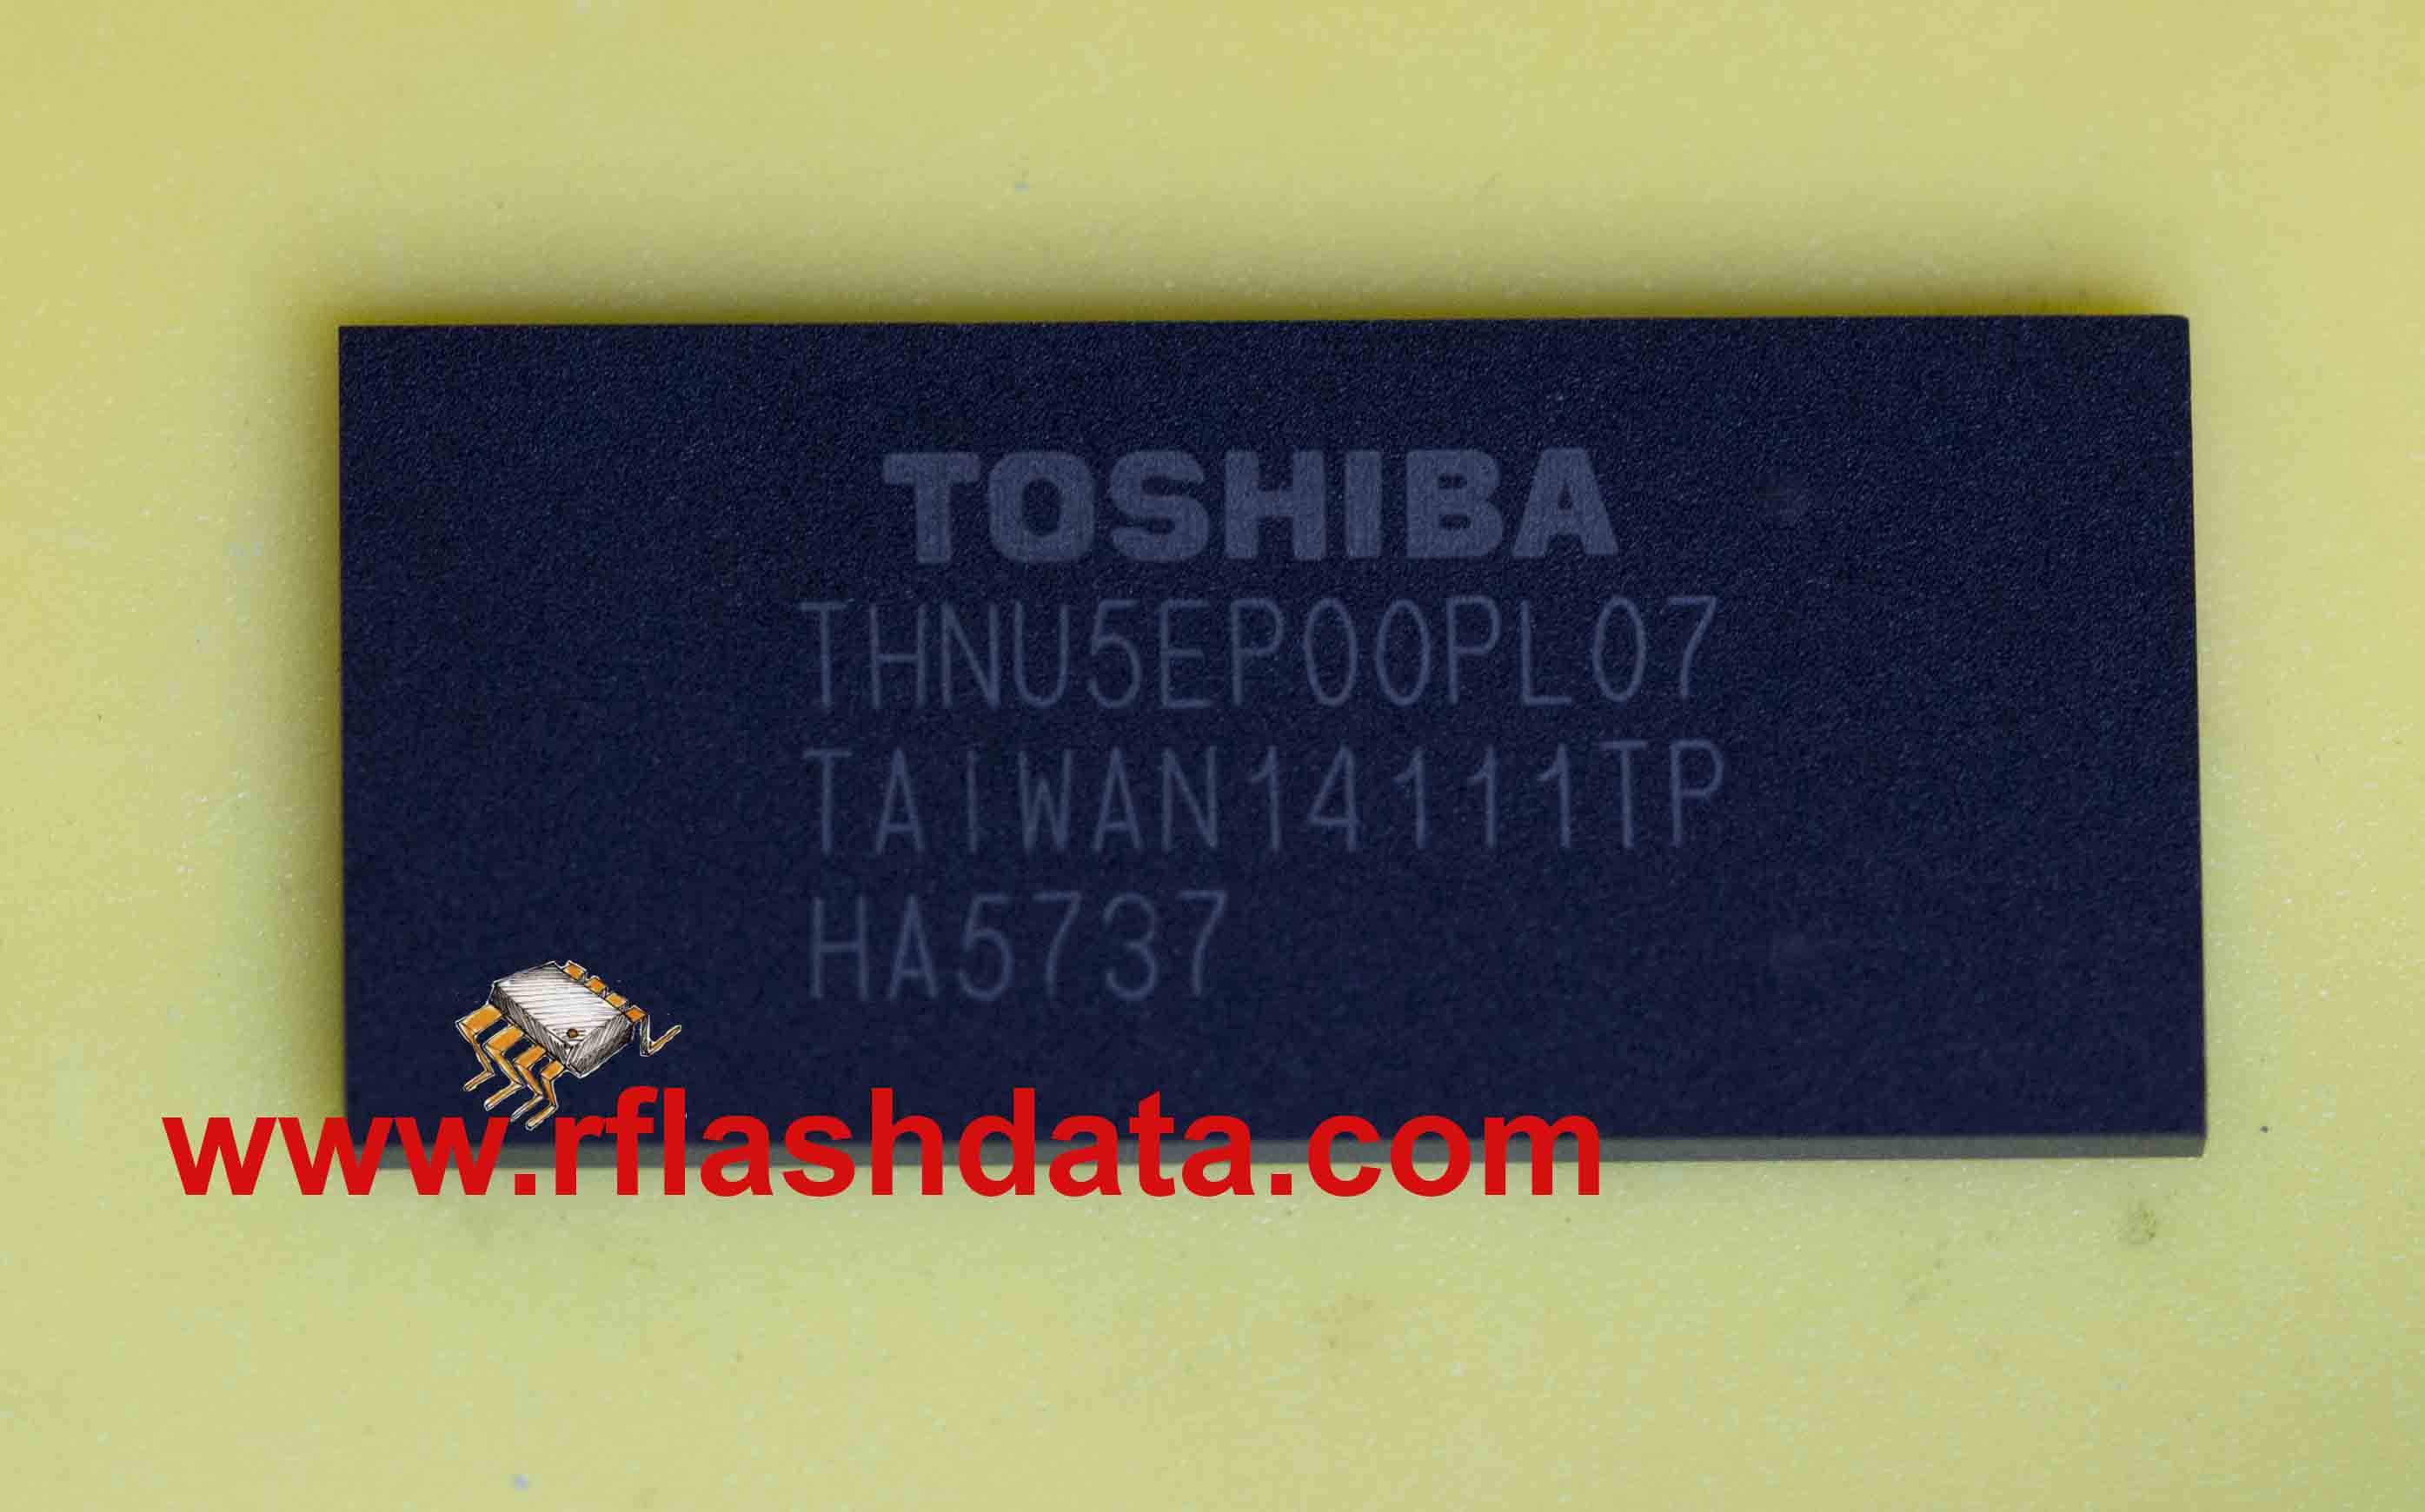 Toshiba THNU5EP00PL07 WAIWAN14111TP HA5737